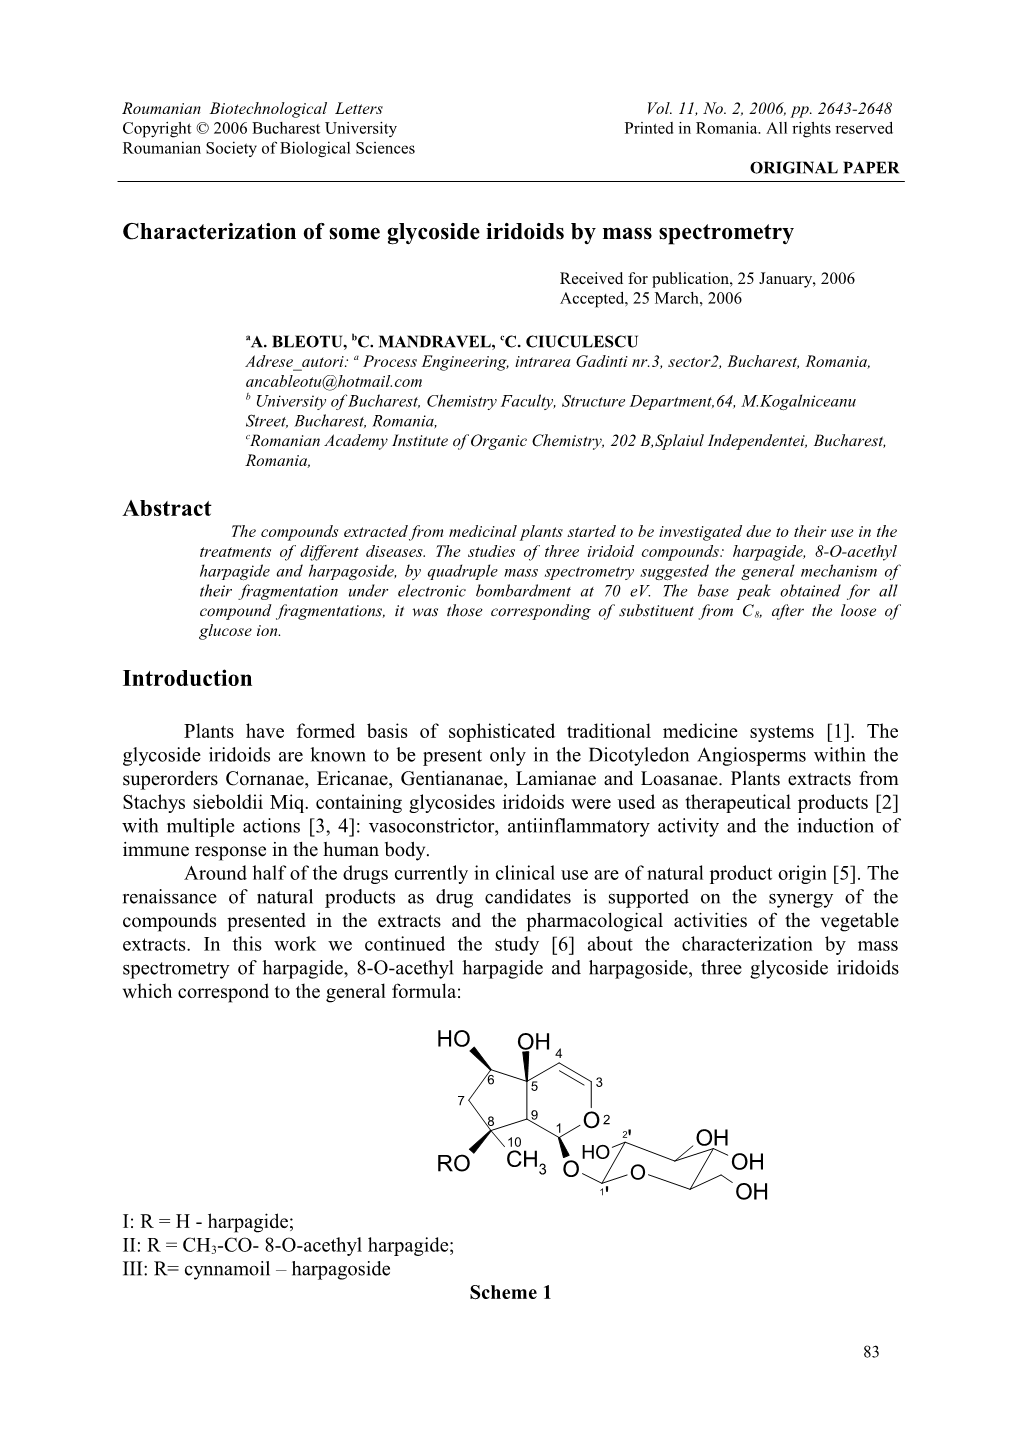 Characterisation of Some Glycoside Iridoids by Mass Spectrometry